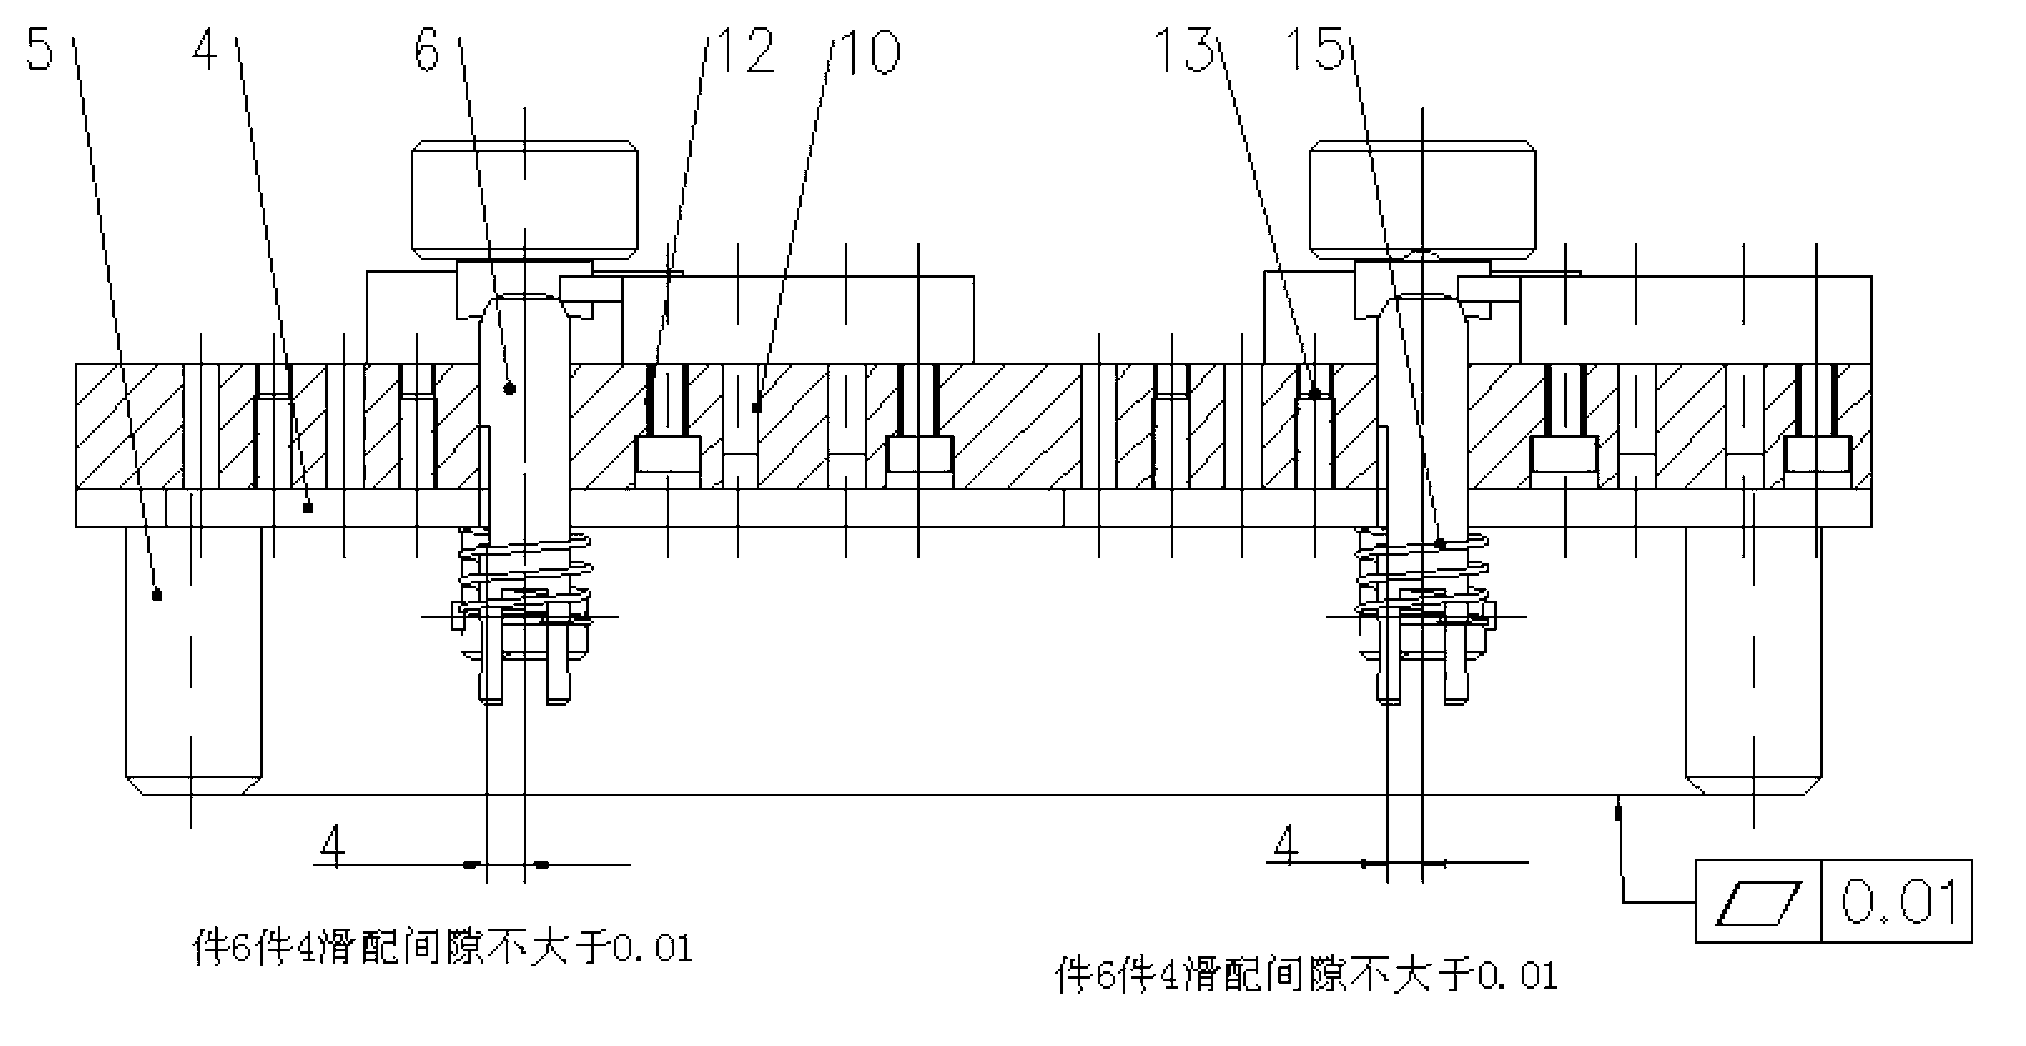 Method for measuring aero-engine compressor blades based on three-coordinate measuring machine